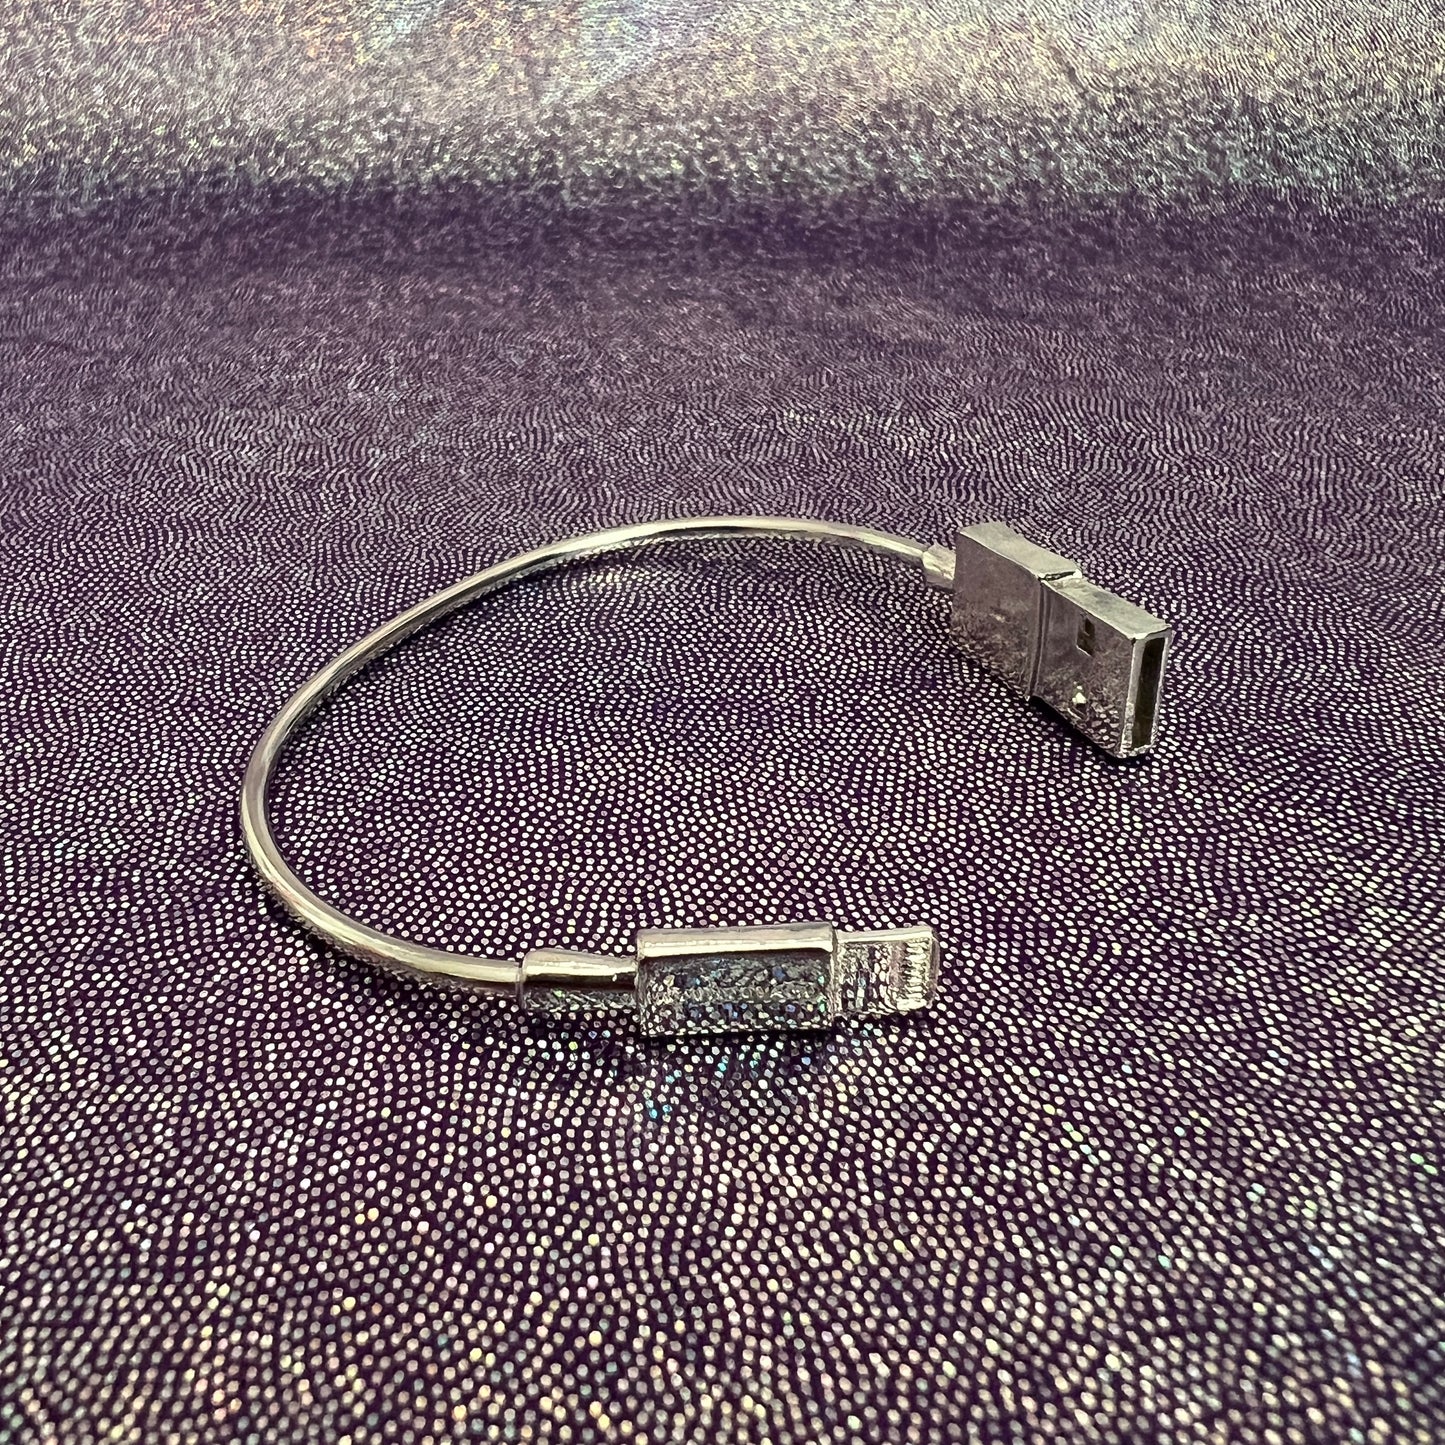 Neotropolis USB Cuff Bracelet